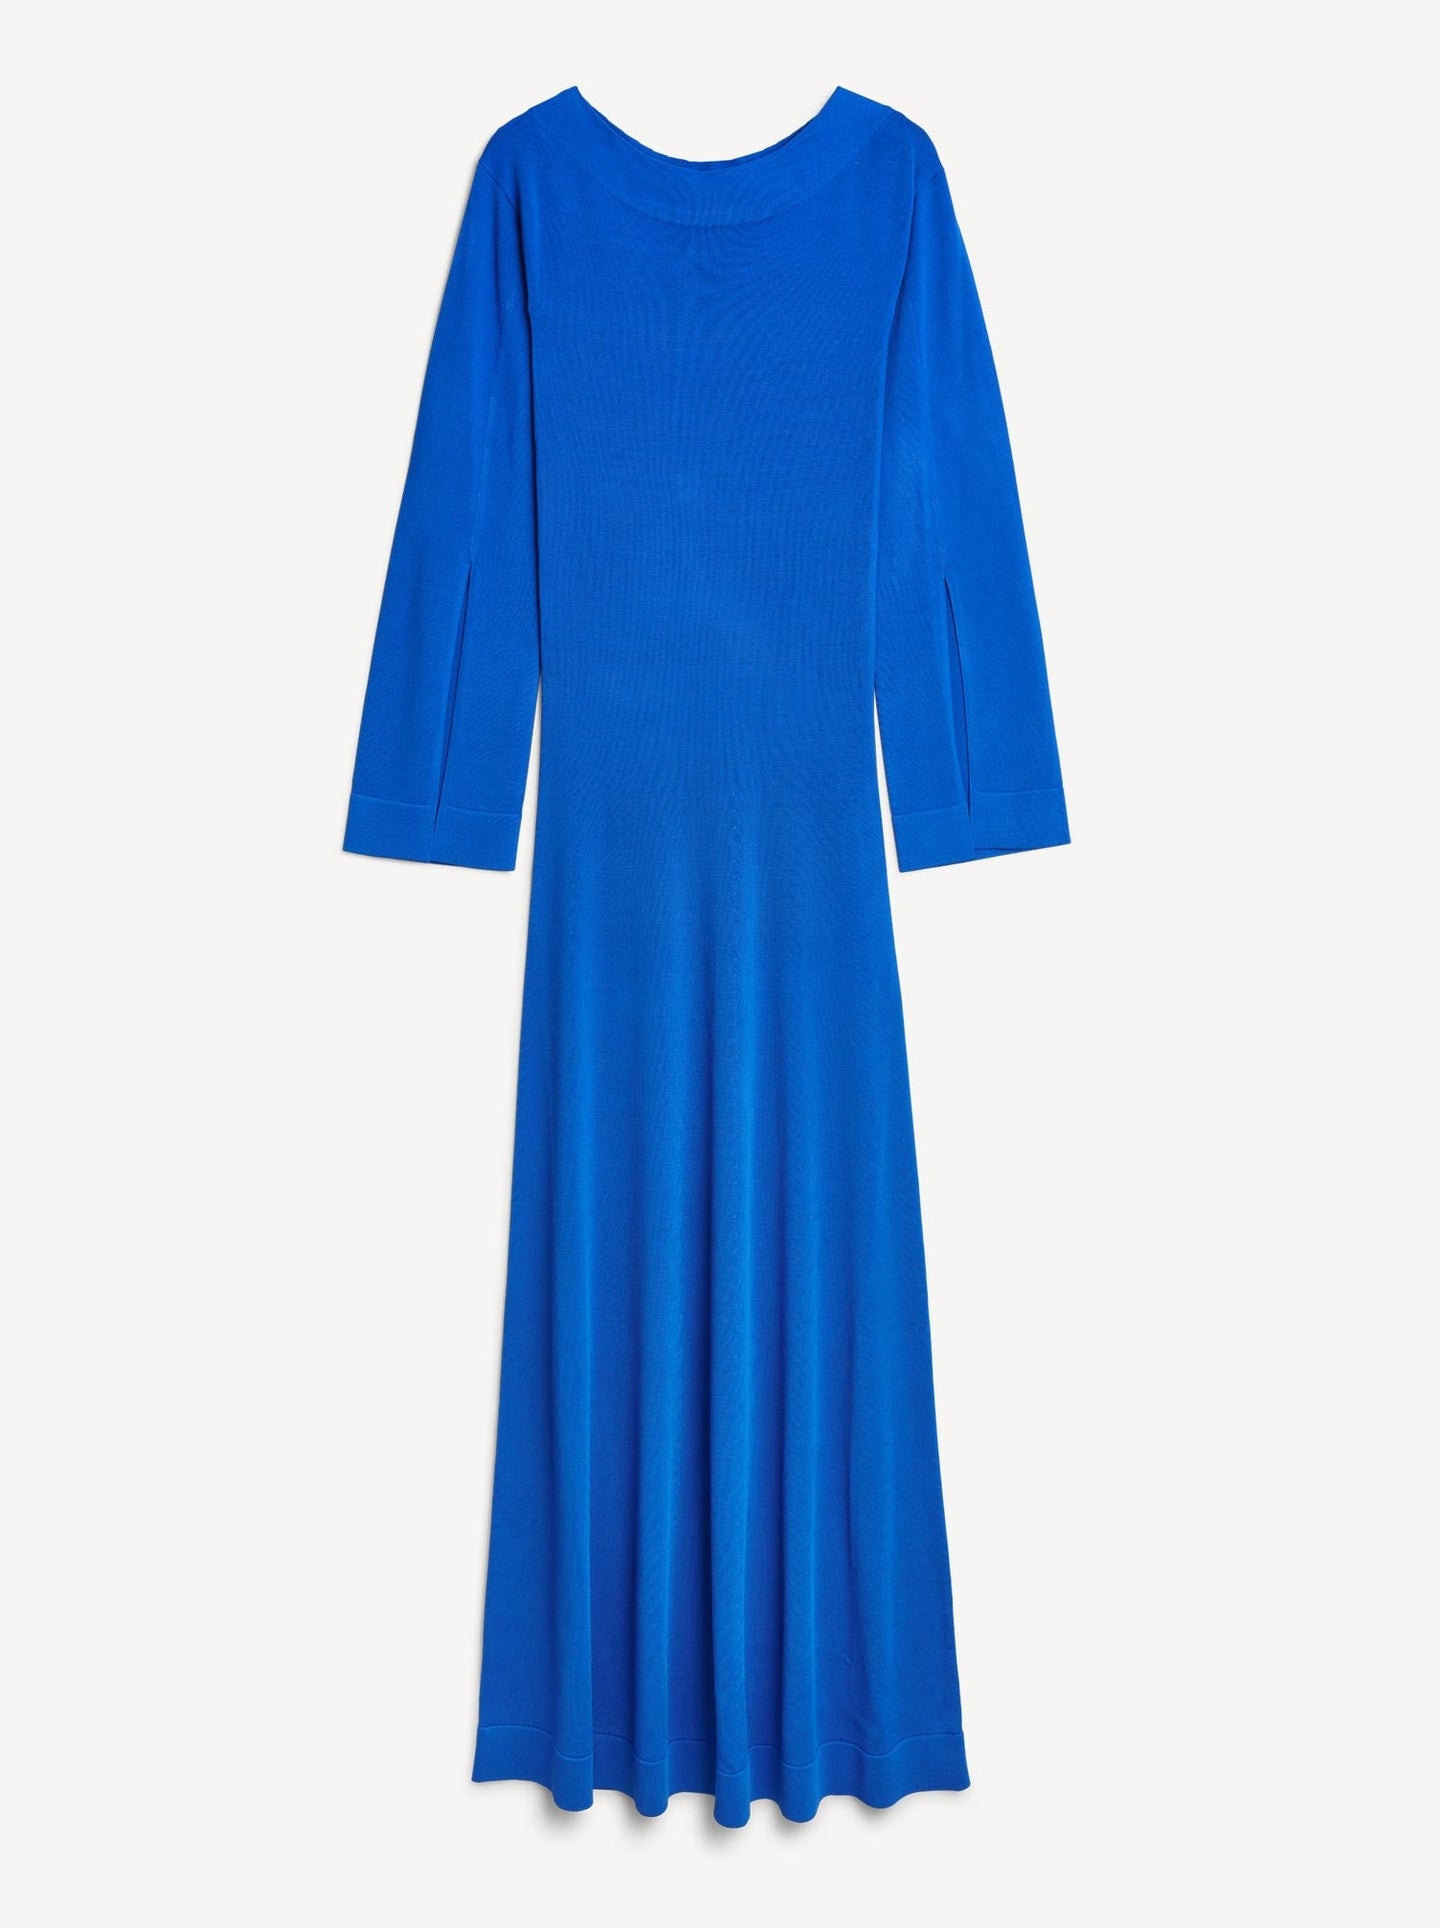 SIMA DRESS ARTIC BLUE BY MALENE BIRGER